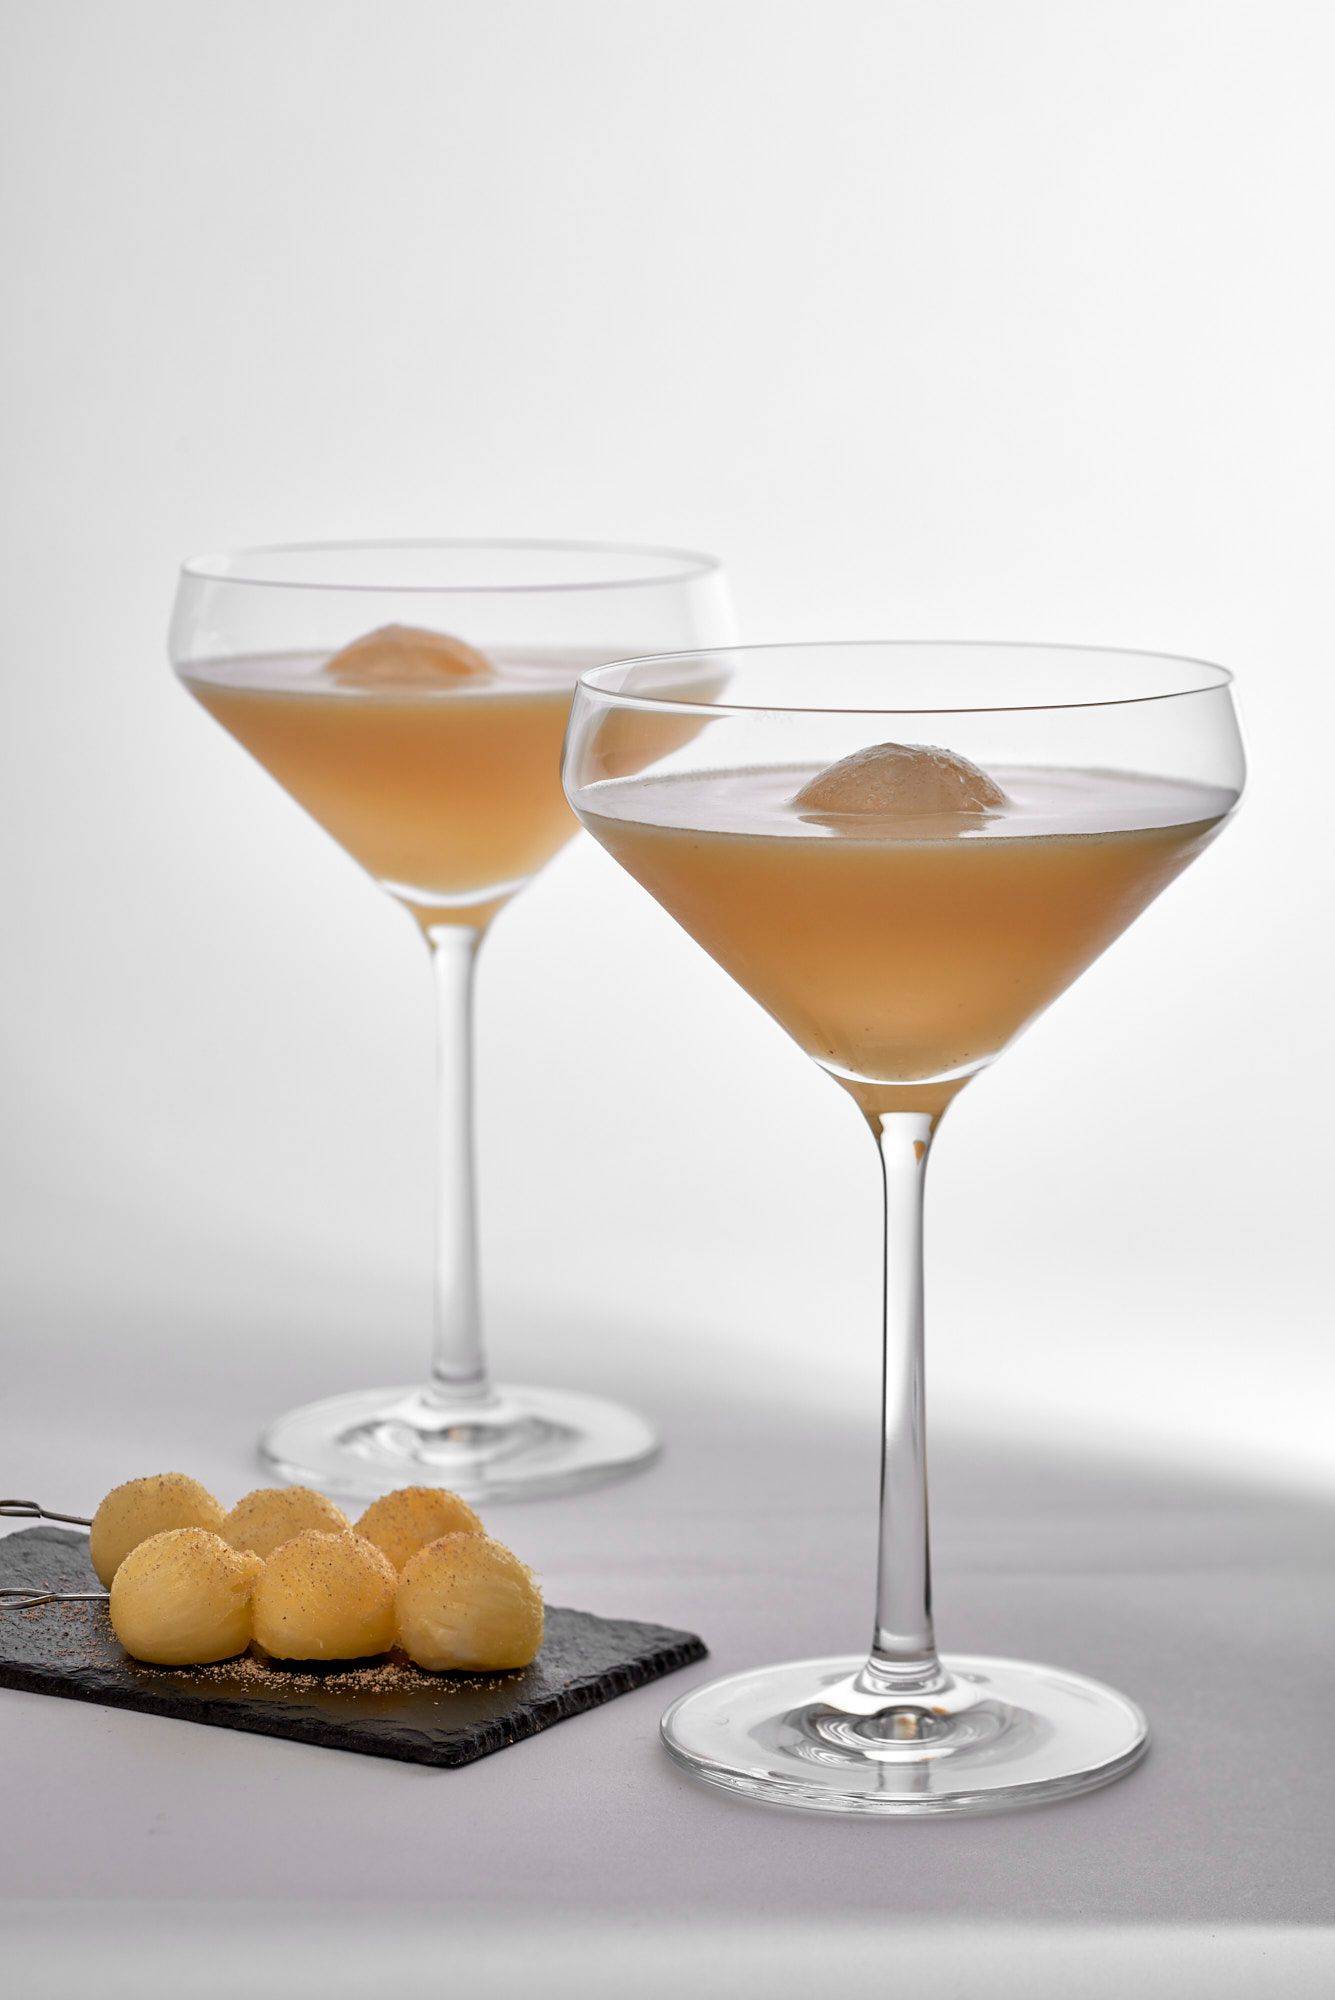 pina colada cocktail on white background